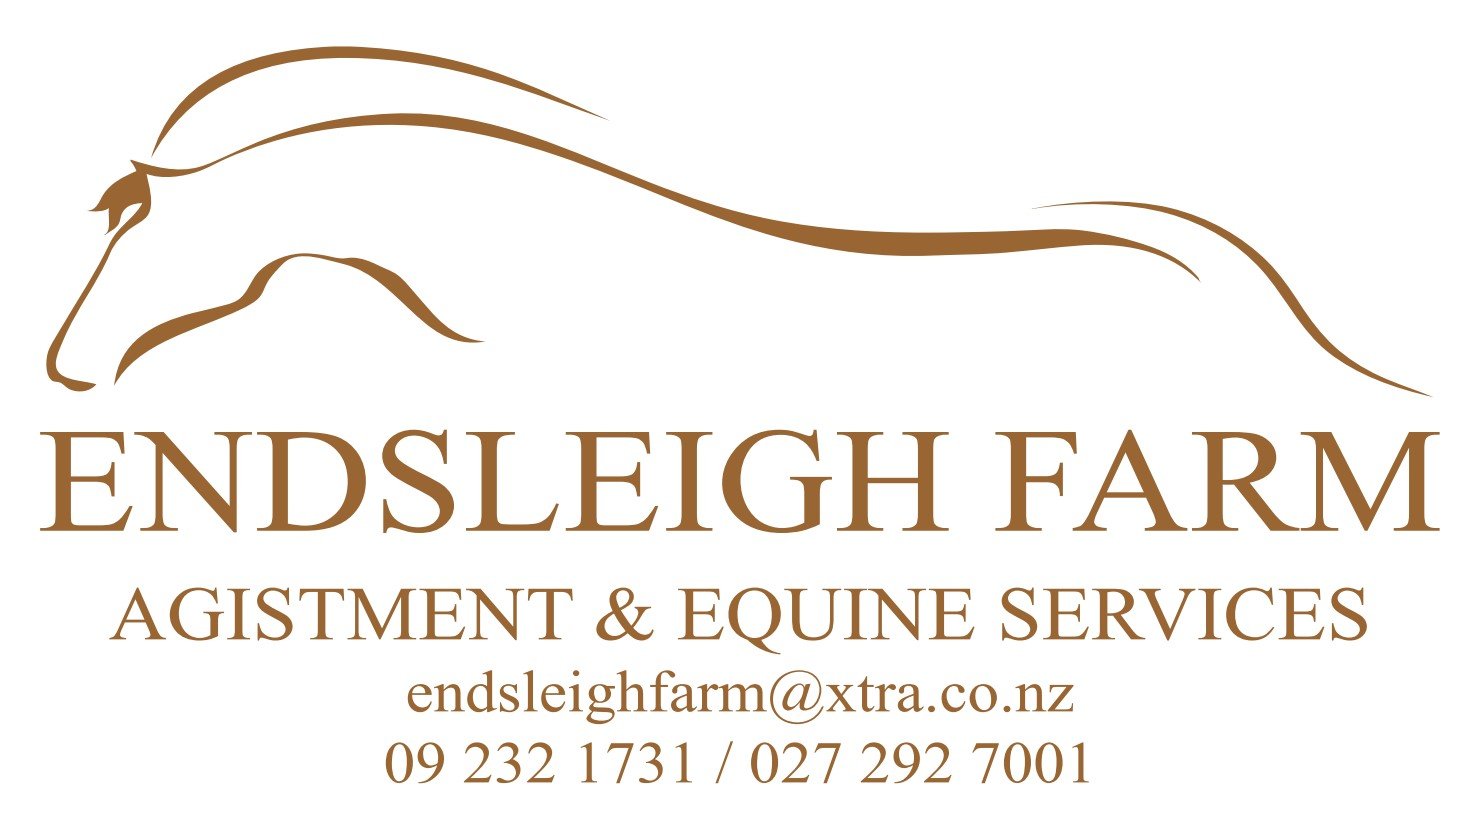 Endsleigh Farm Logo.jpg